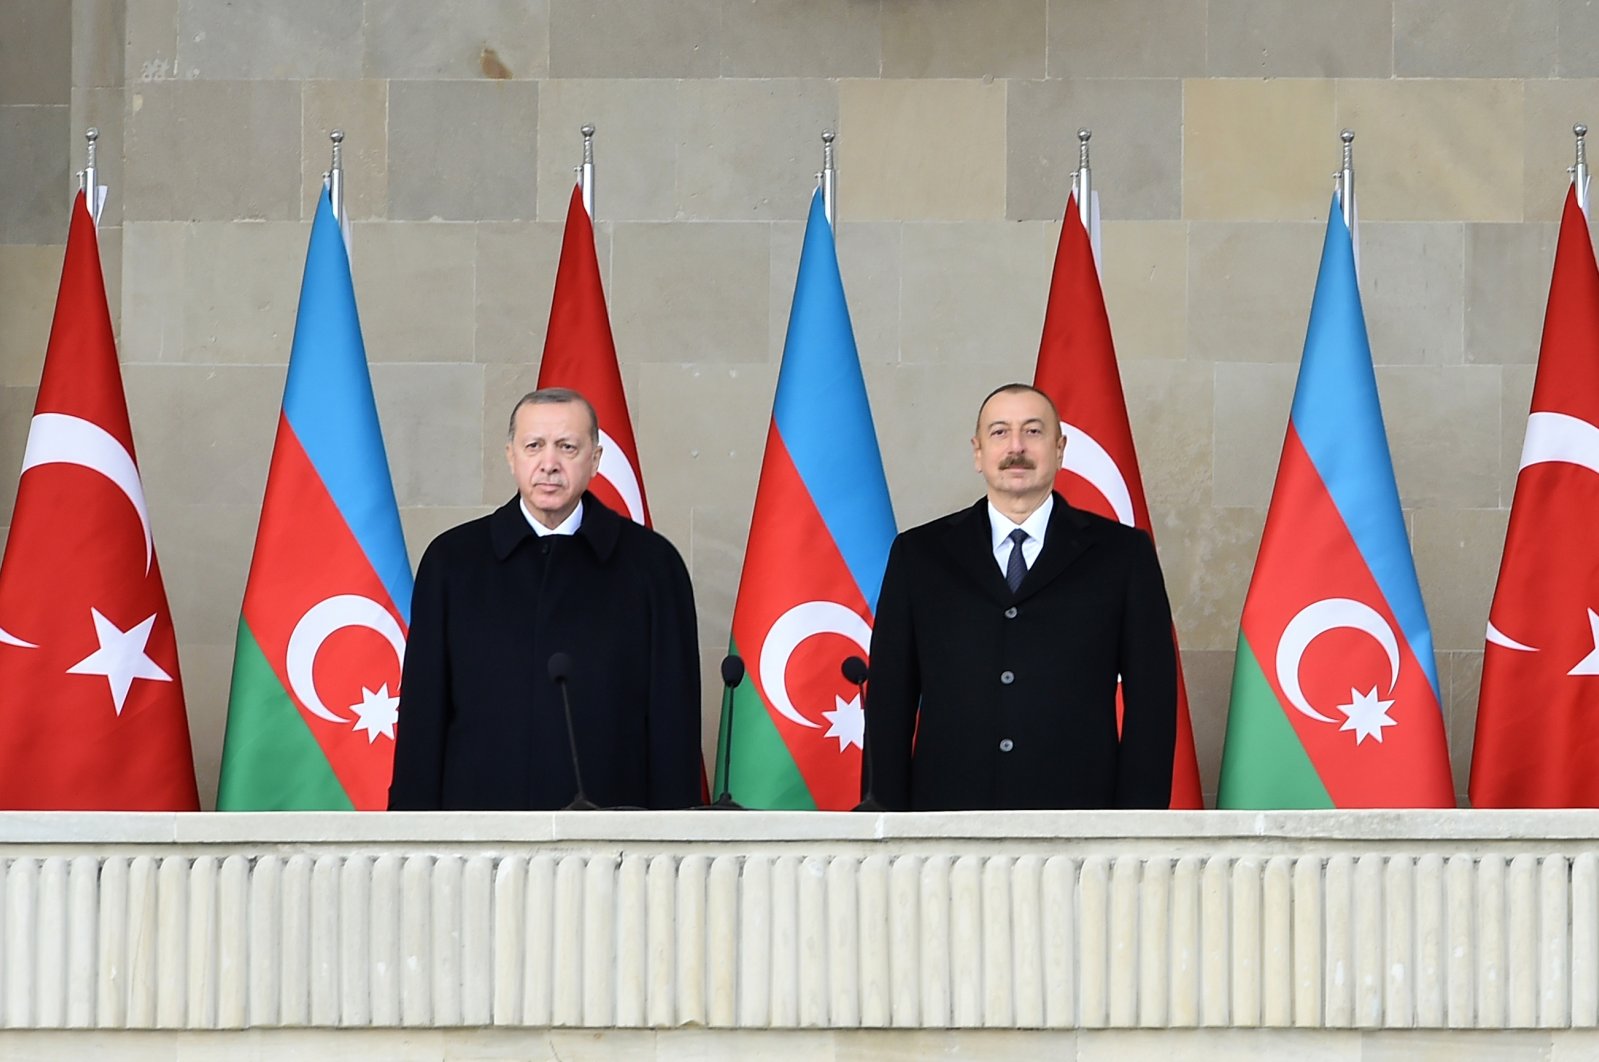 Turkish President Recep Tayyip Erdoğan (L) and Azerbaijani President Ilham Aliyev attend a military parade celebrating Azerbaijan's victory in the Nagorno-Karabakh armed conflict, in Baku, Azerbaijan, Dec. 10, 2020. (EPA-EFE Photo)